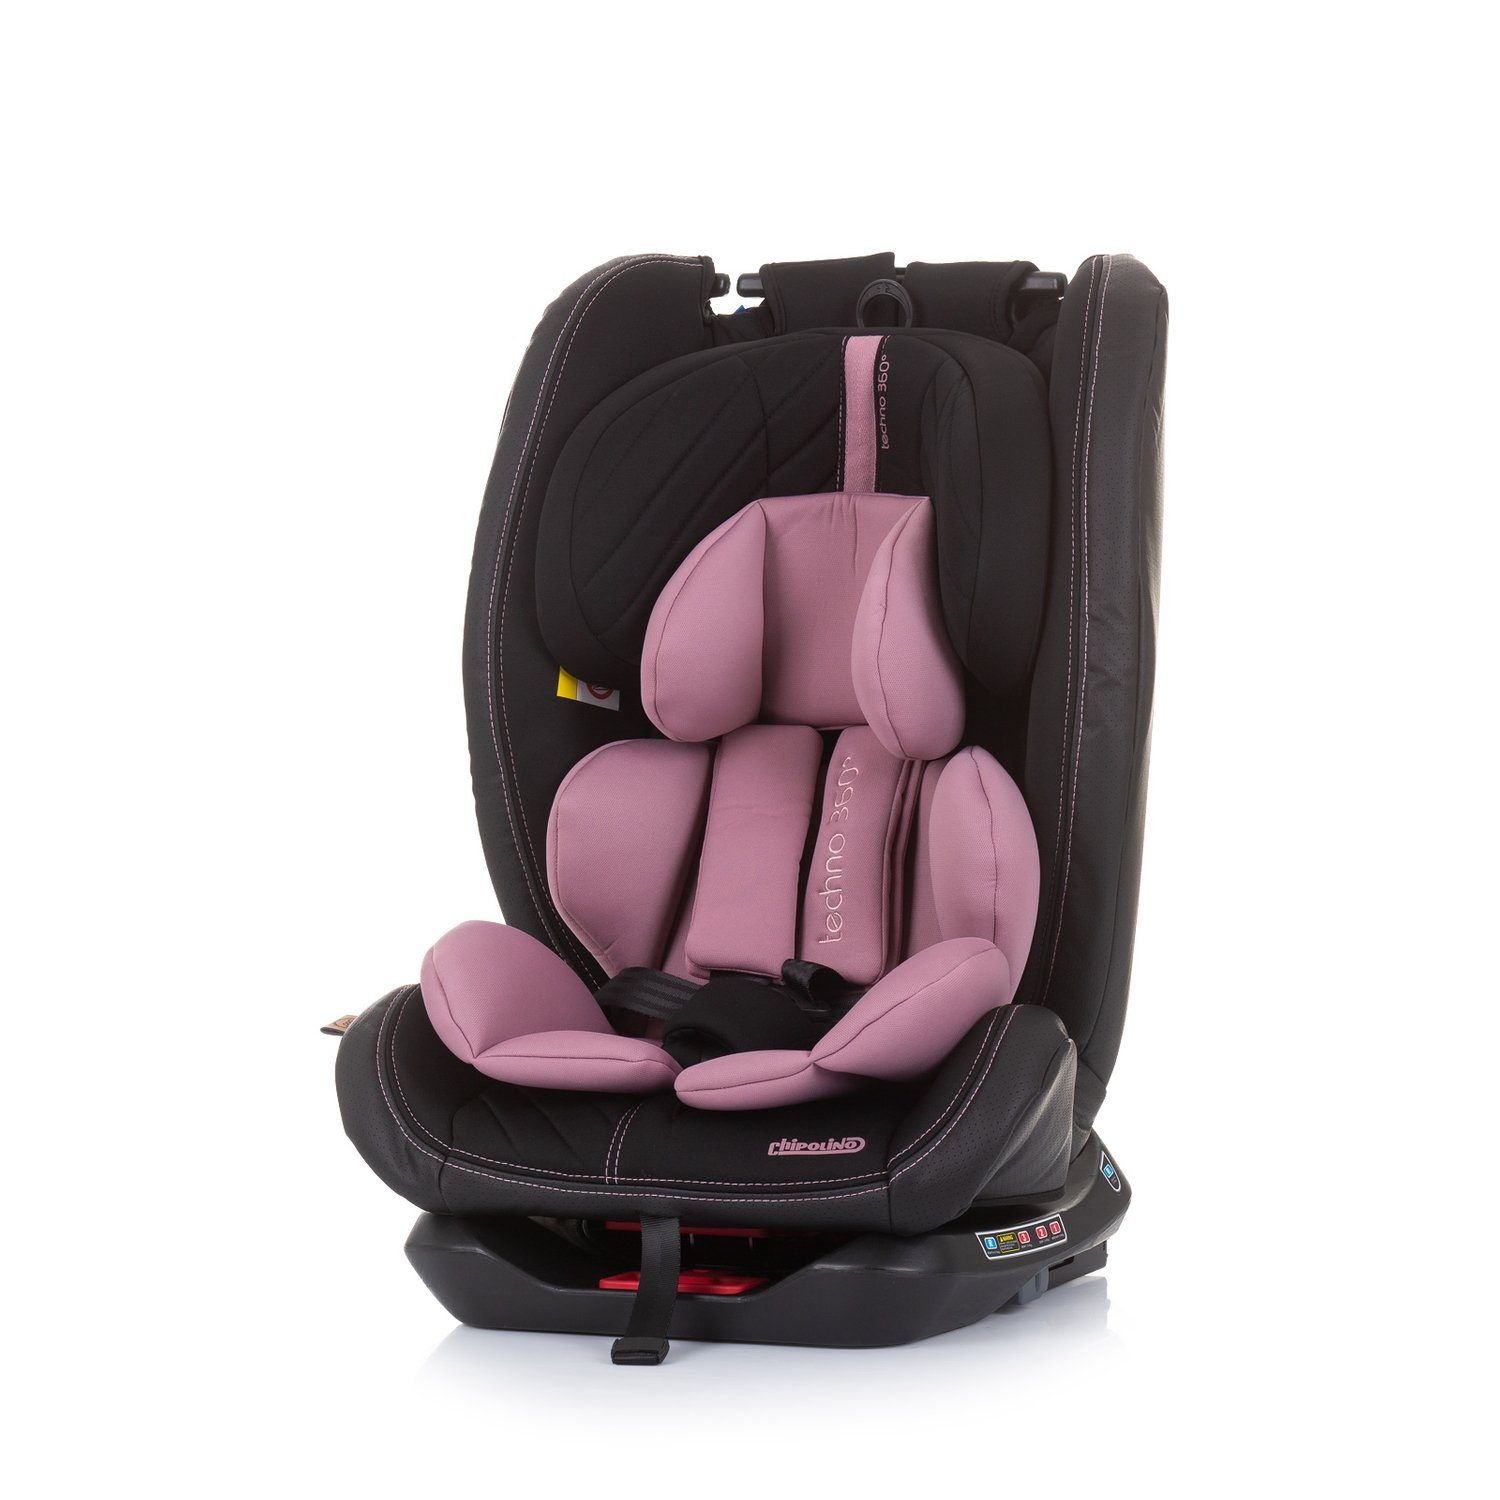 36 Kindersitz Grad Gruppe 0+/1/2/3, Techno kg) Isofix, Autokindersitz (0 36 bis: - Chipolino 360 kg, rosa drehbar